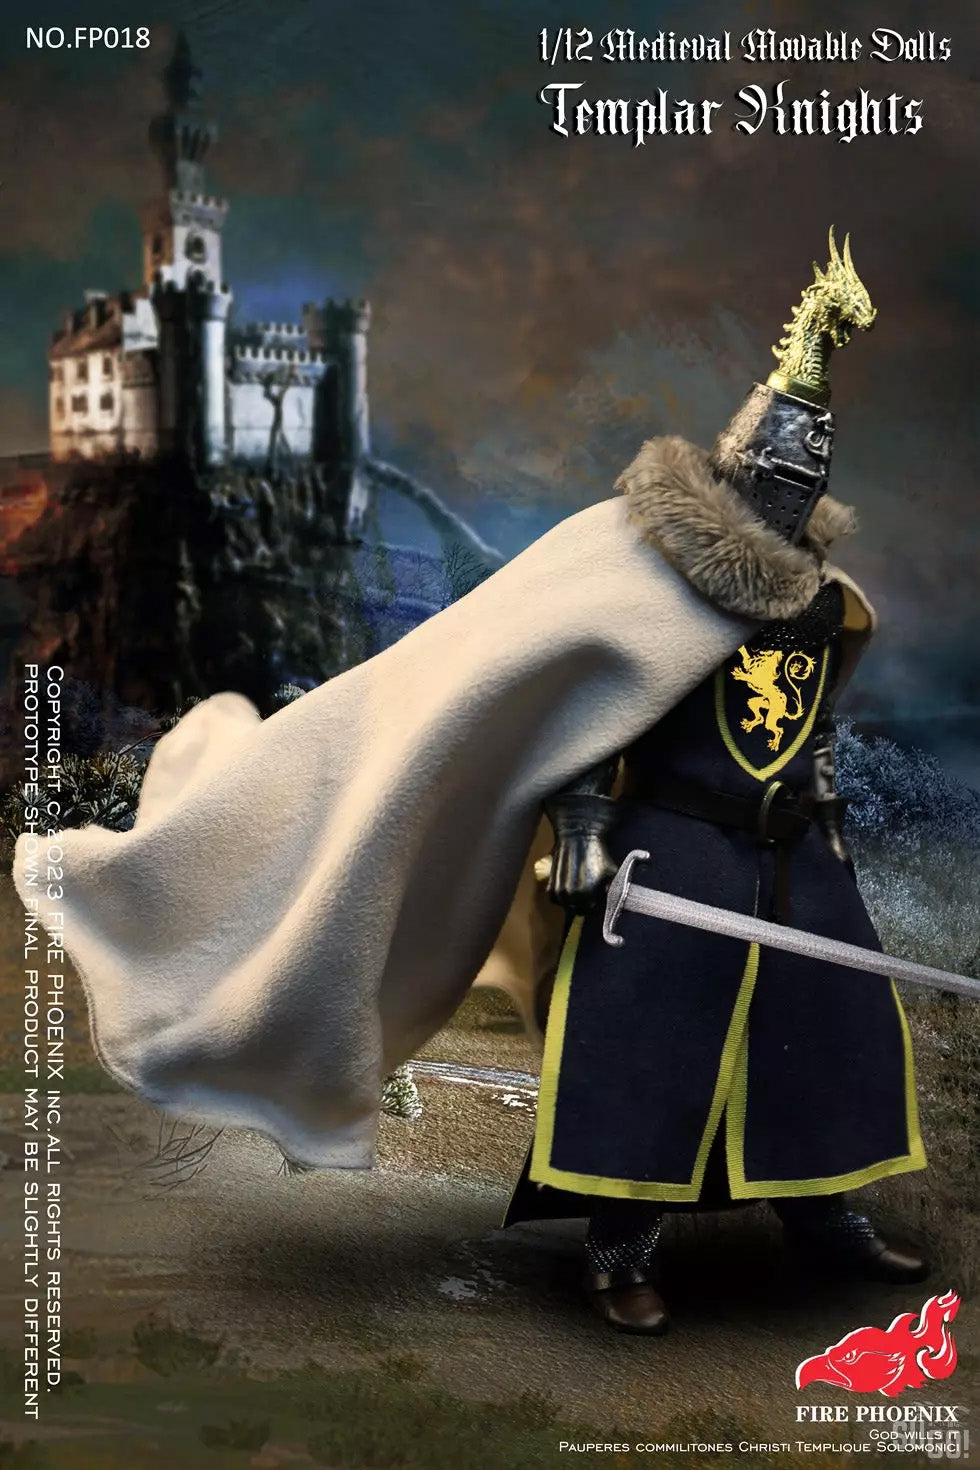 Fire Phoenix - FP020 - Malta Knight & Templar Knight (Set of 2) (1/12 Scale) - Marvelous Toys